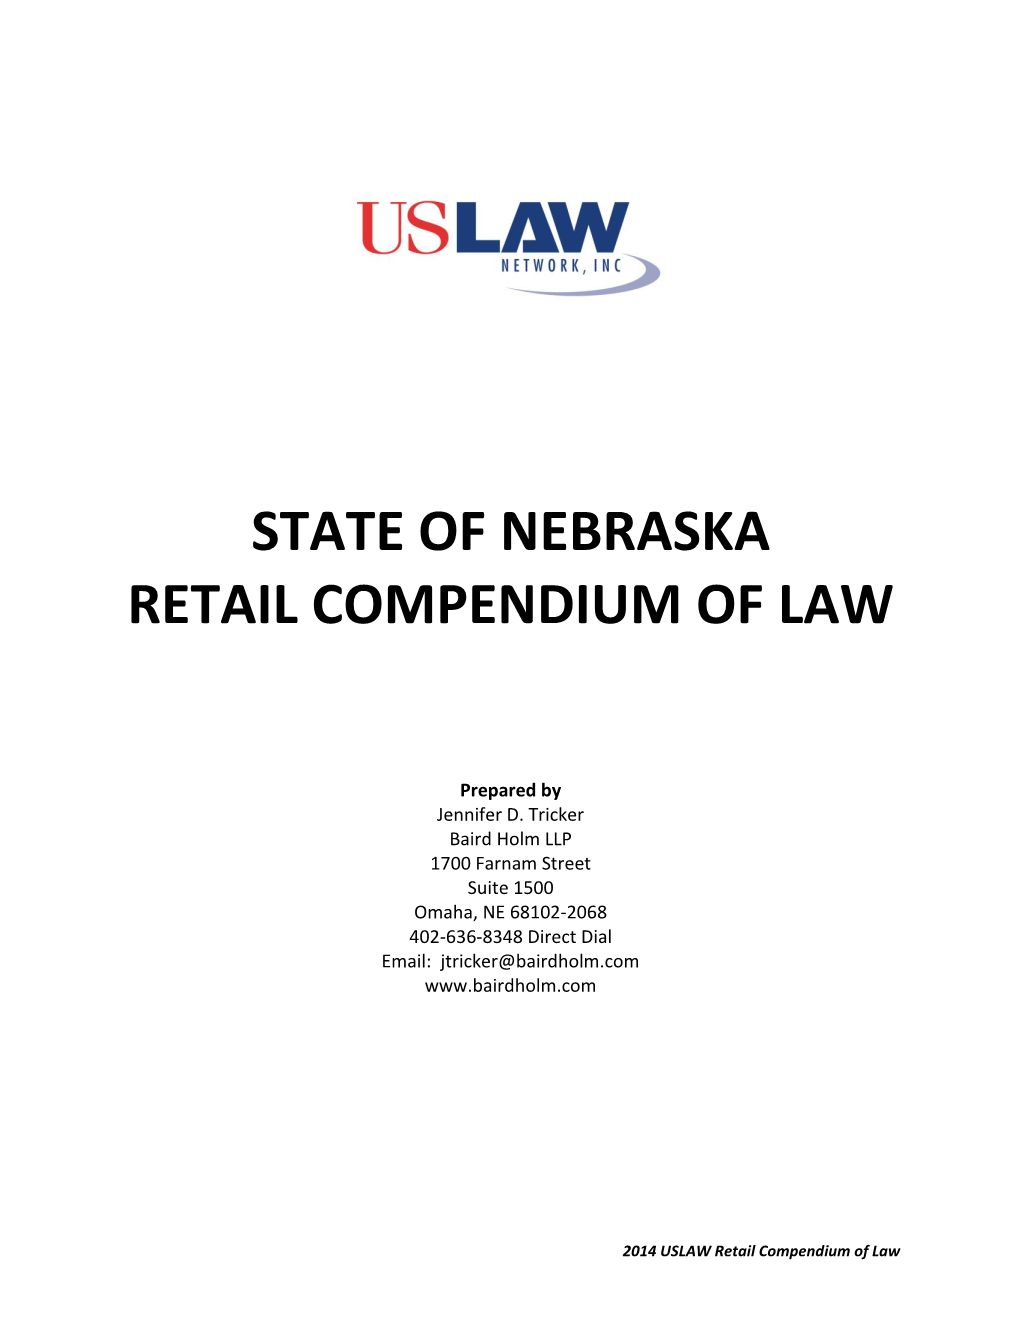 State of Nebraska Retail Compendium of Law